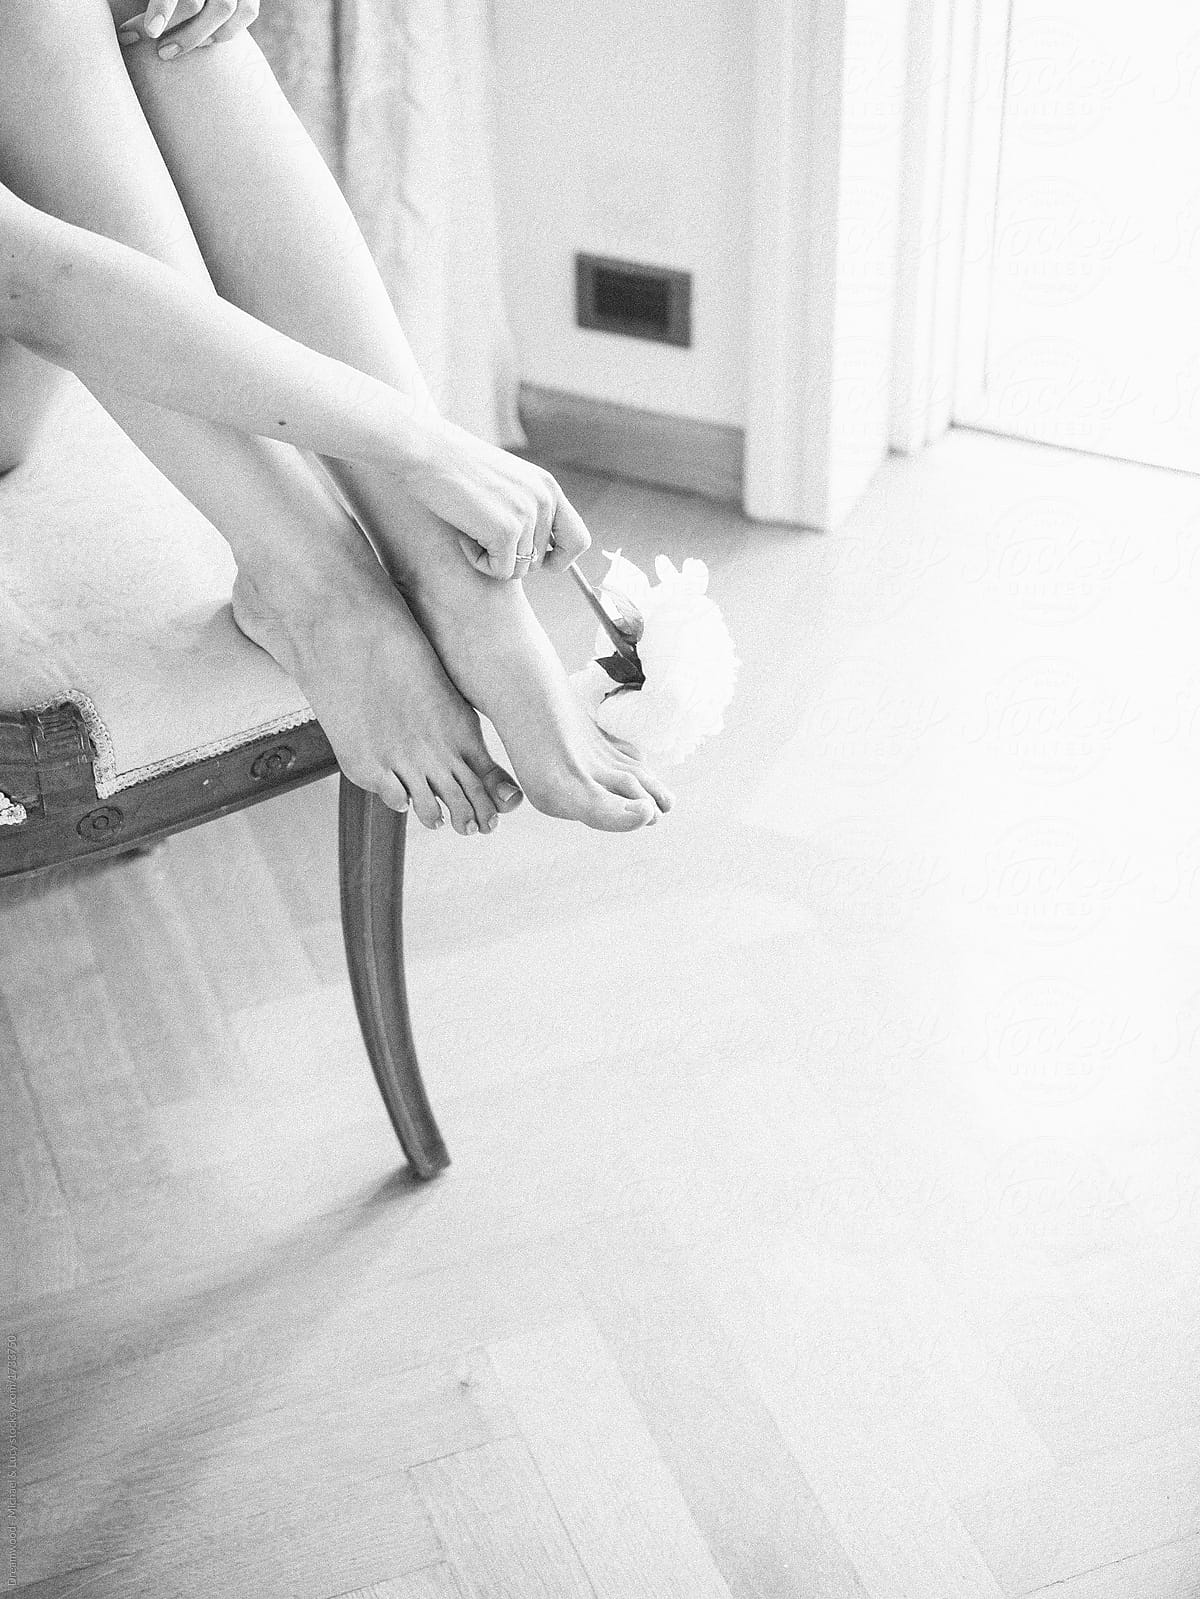 Crop gentle woman posing barefoot